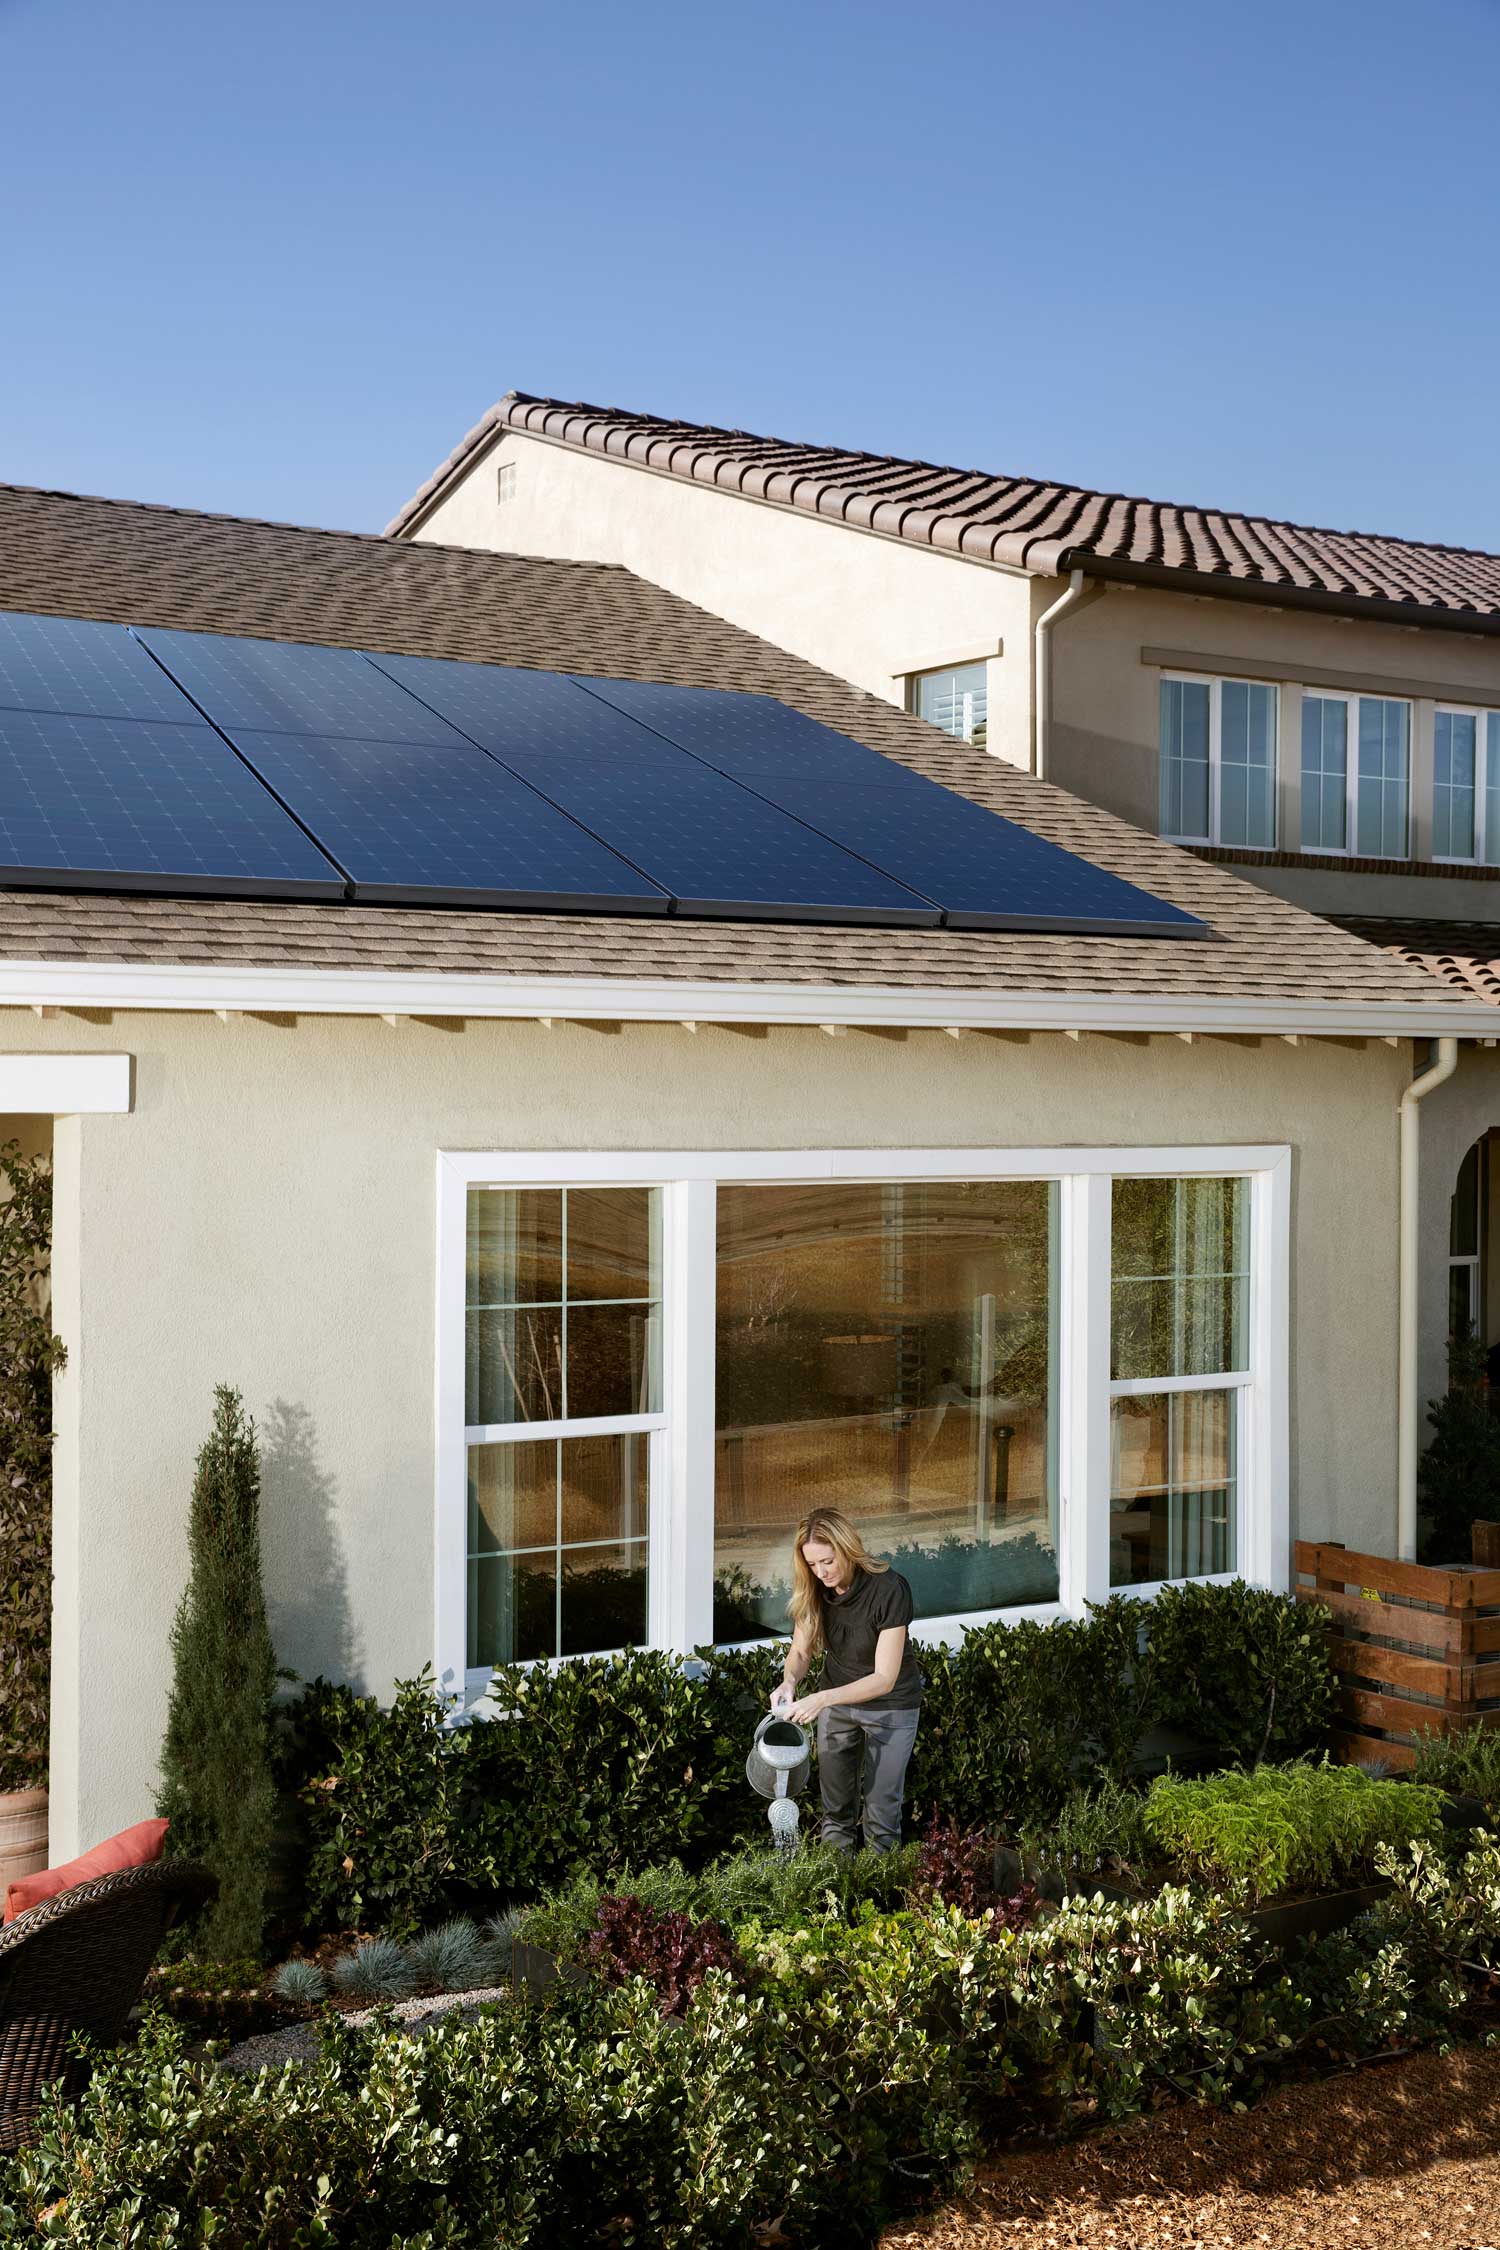 SunPower by Custom Energy is the best company for solar savings in Salt Lake City.